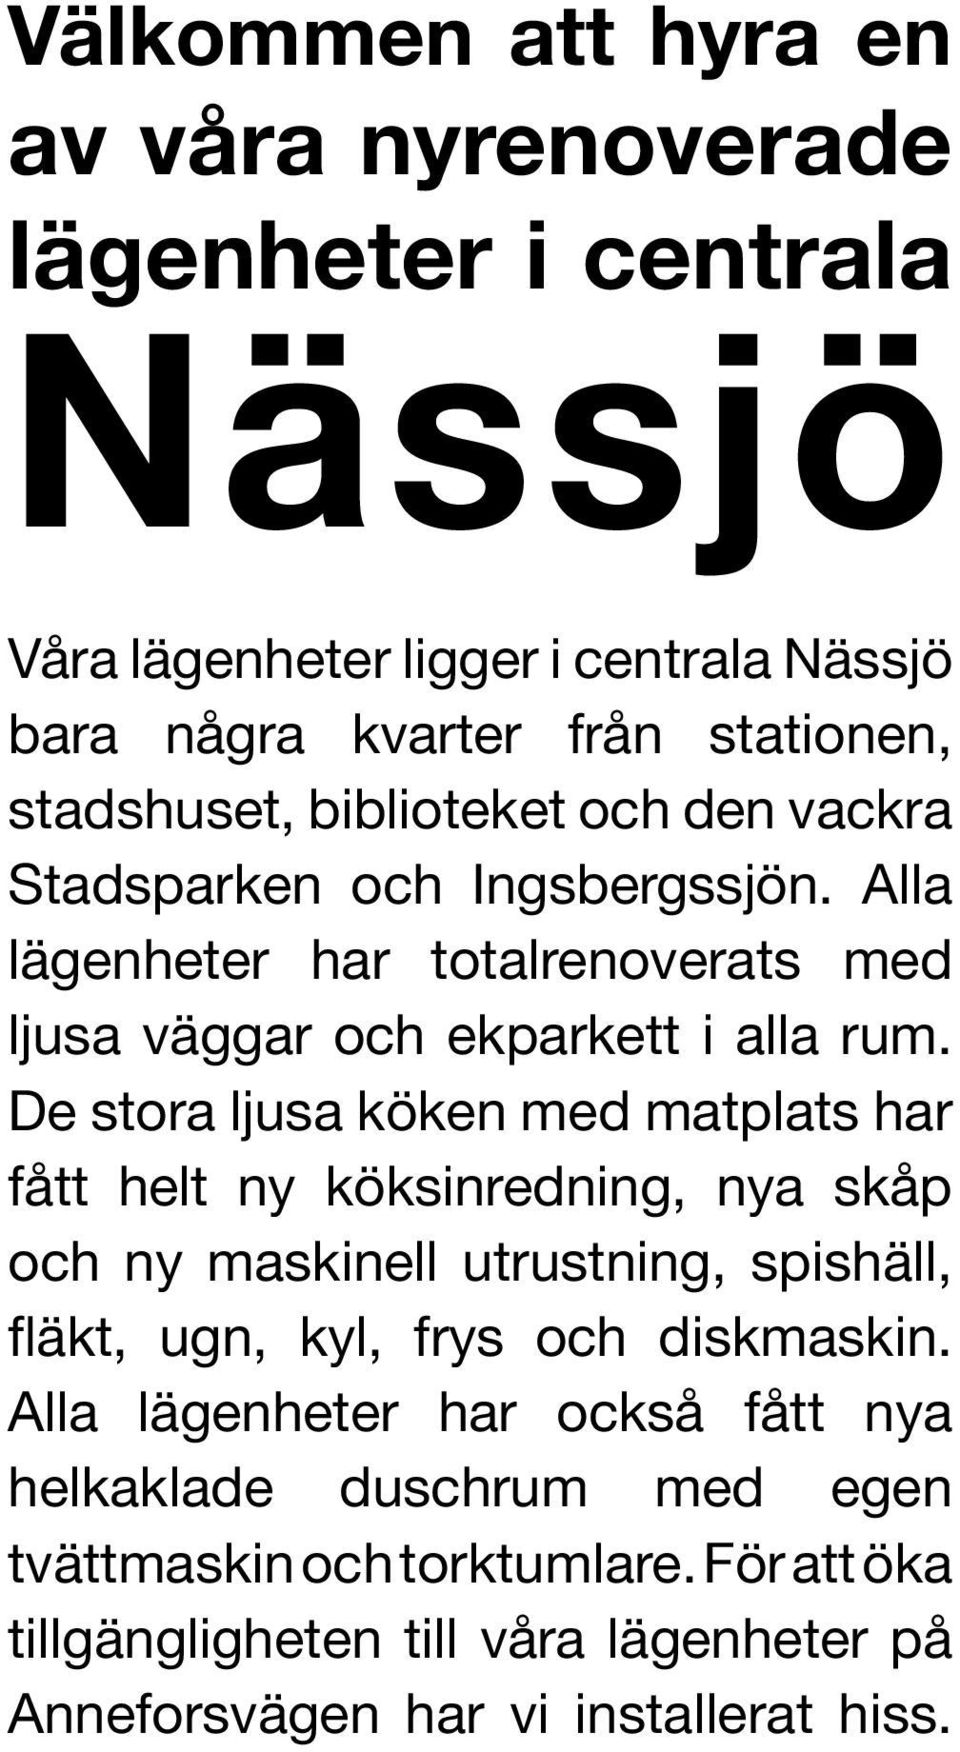 Anmäl intresse Bo i. Nässjö - PDF Gratis nedladdning